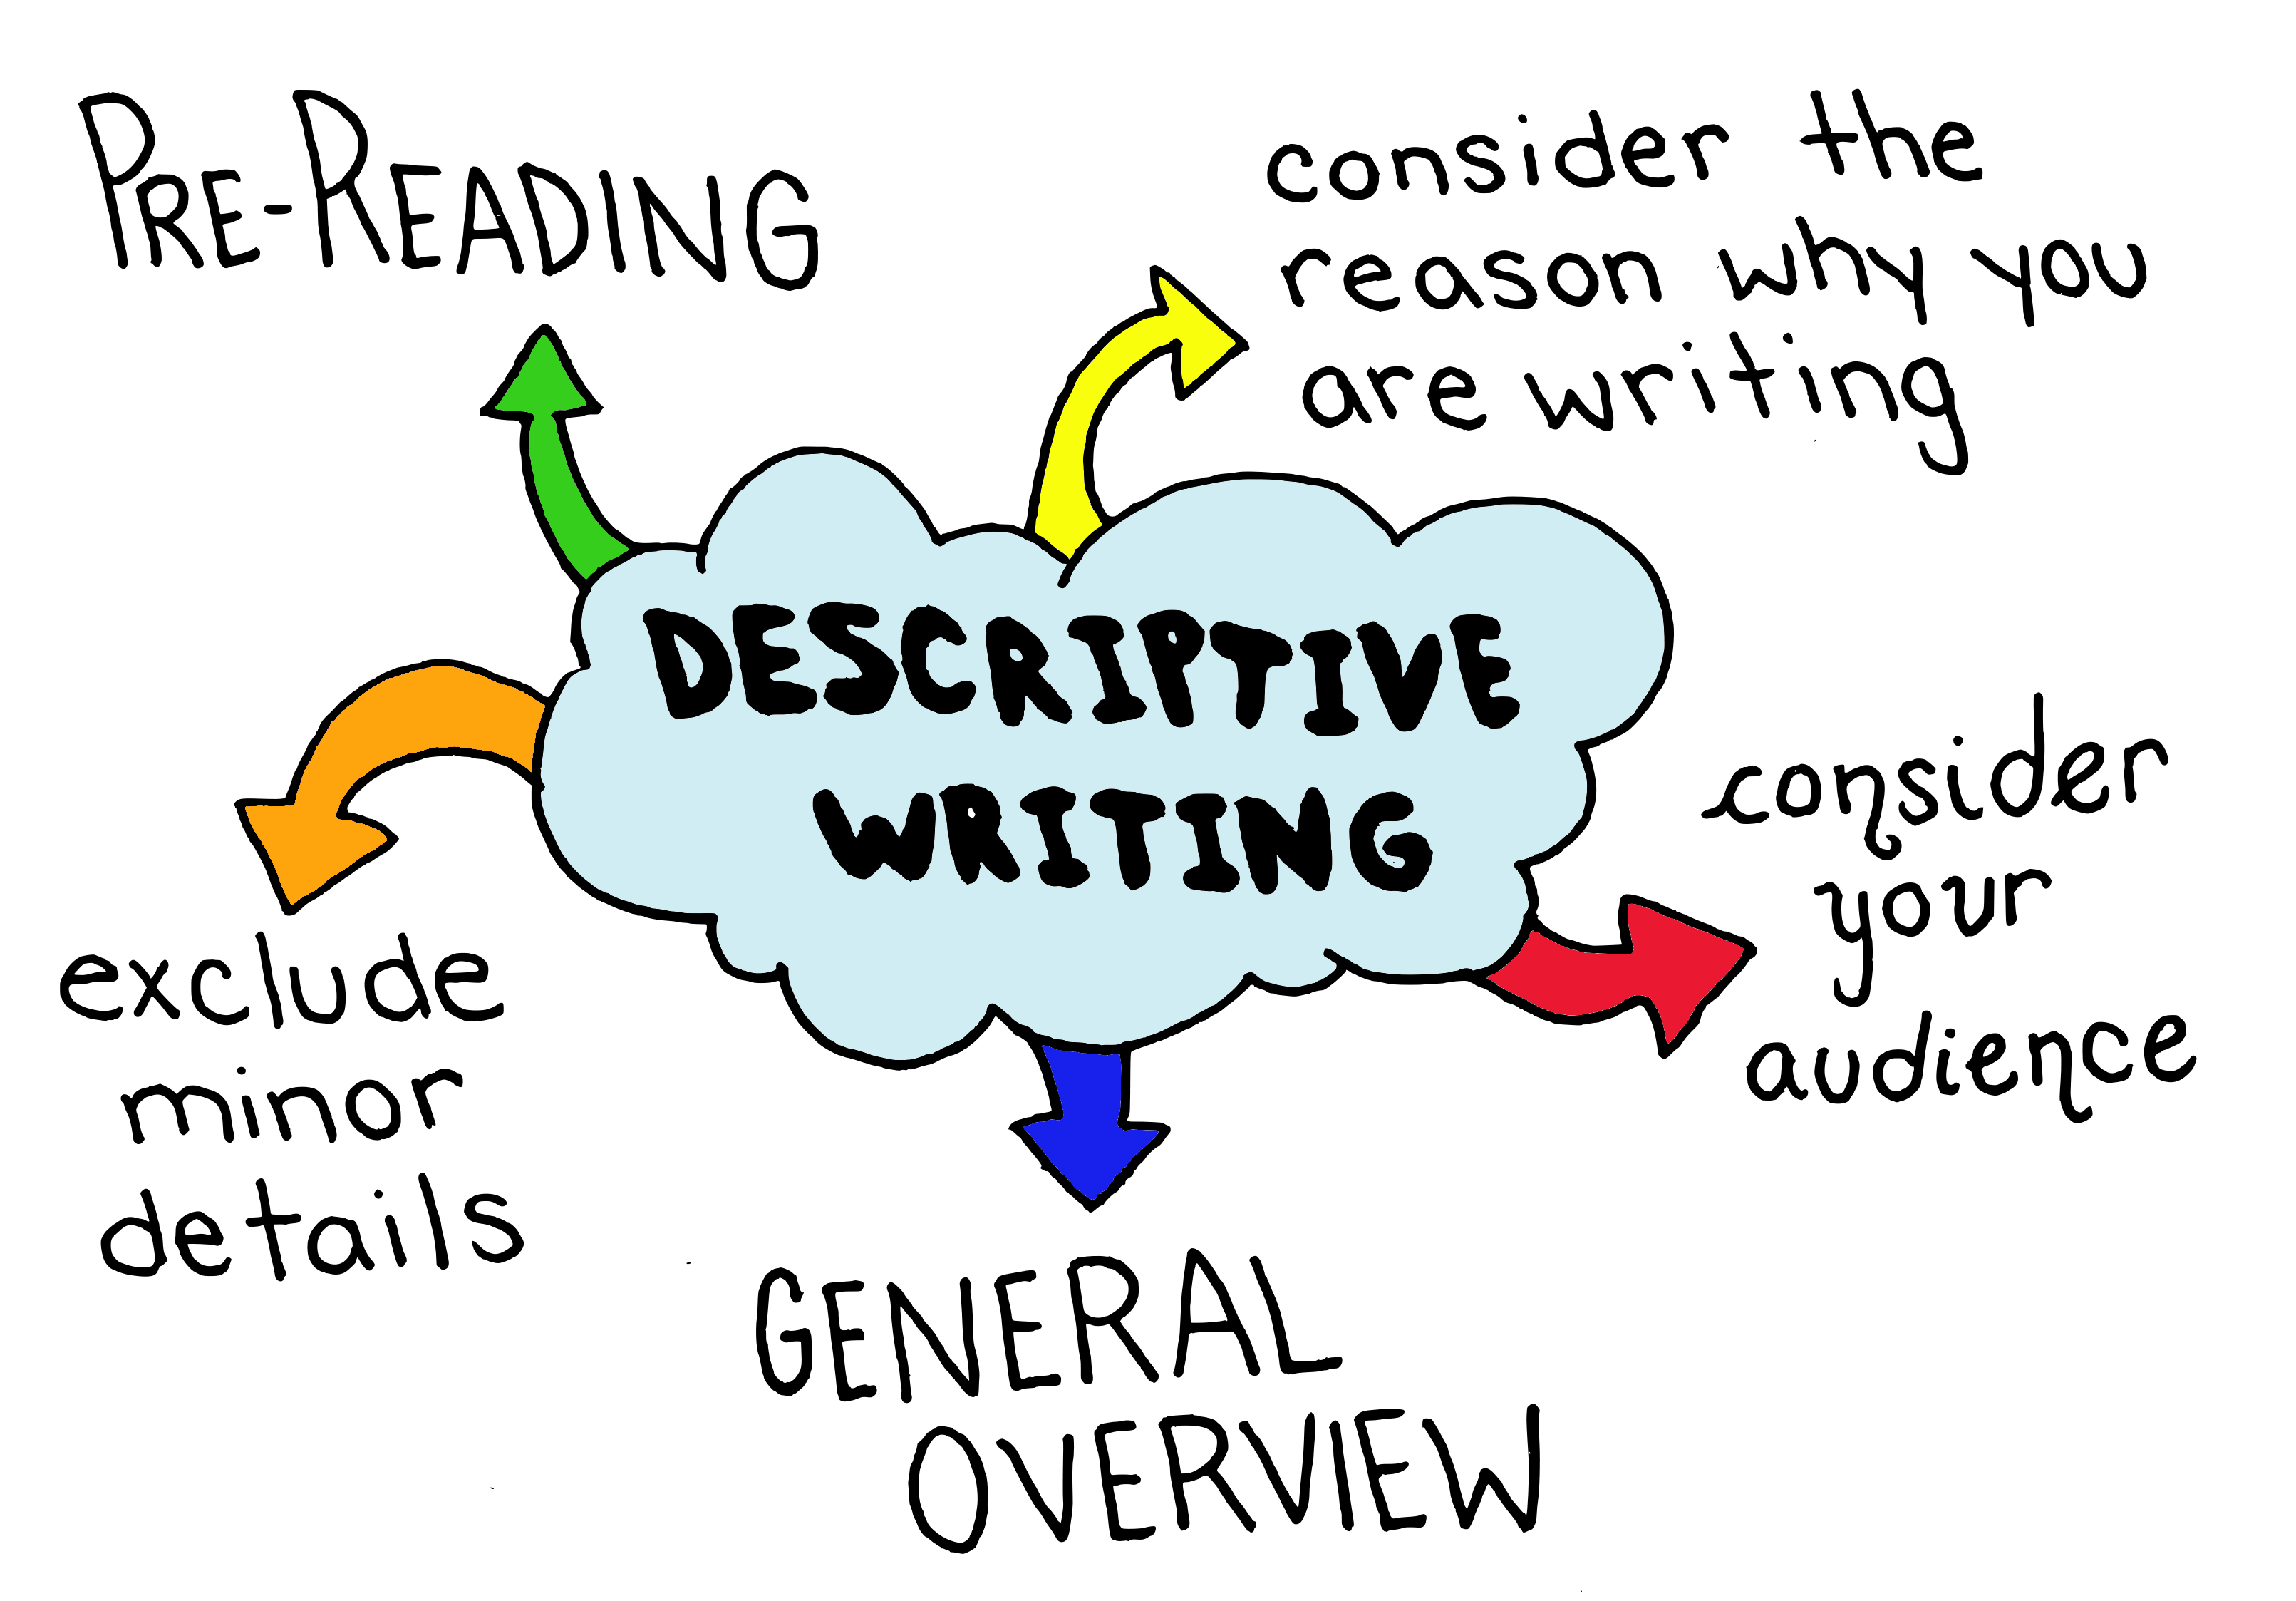 is creative writing the same as descriptive writing